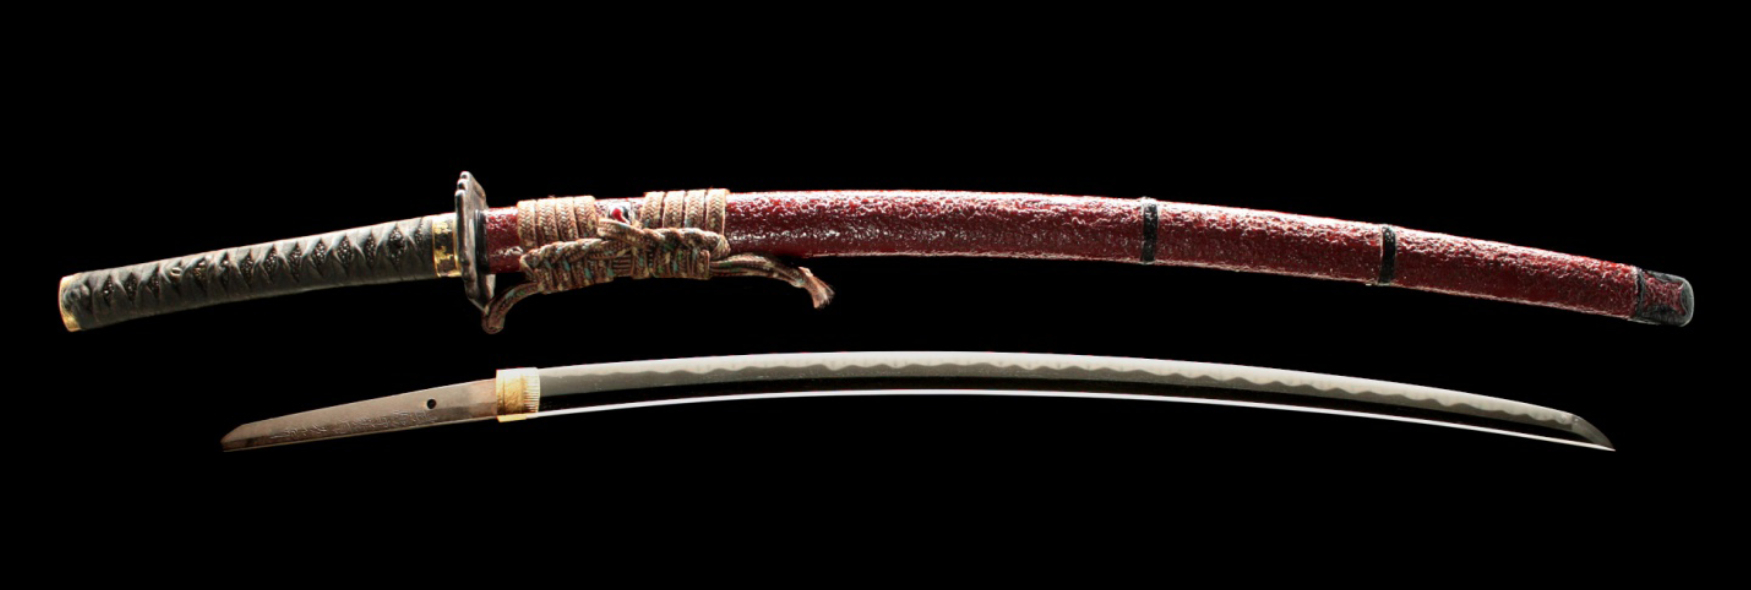 A Guide to Buying a Real Katana (Samurai Sword)